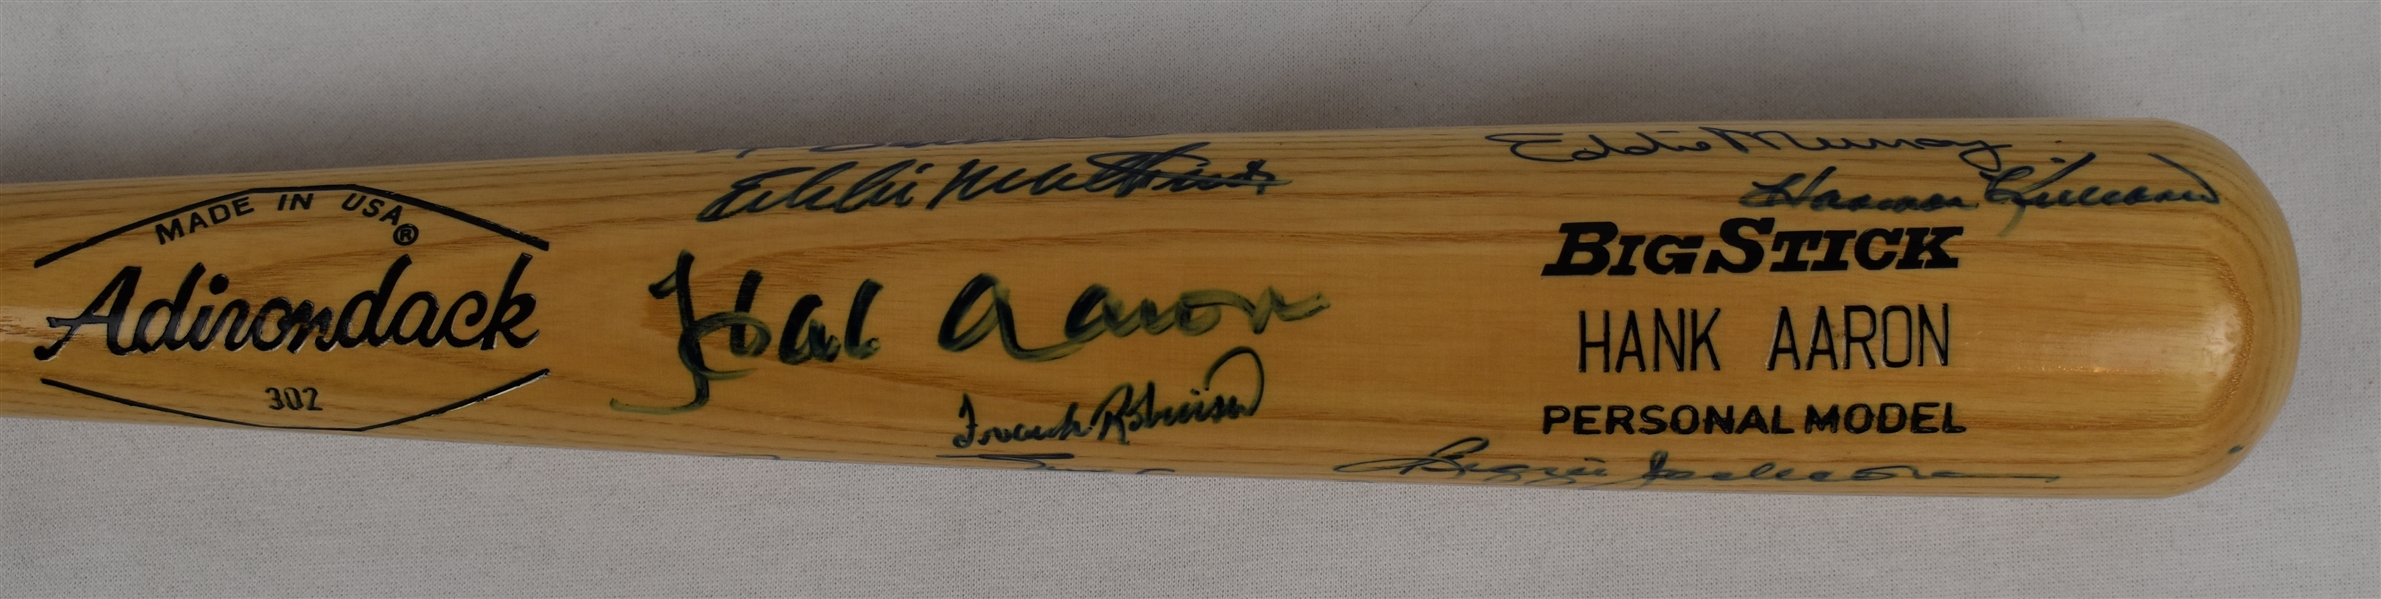 500 Home Run Club Autographed Bat